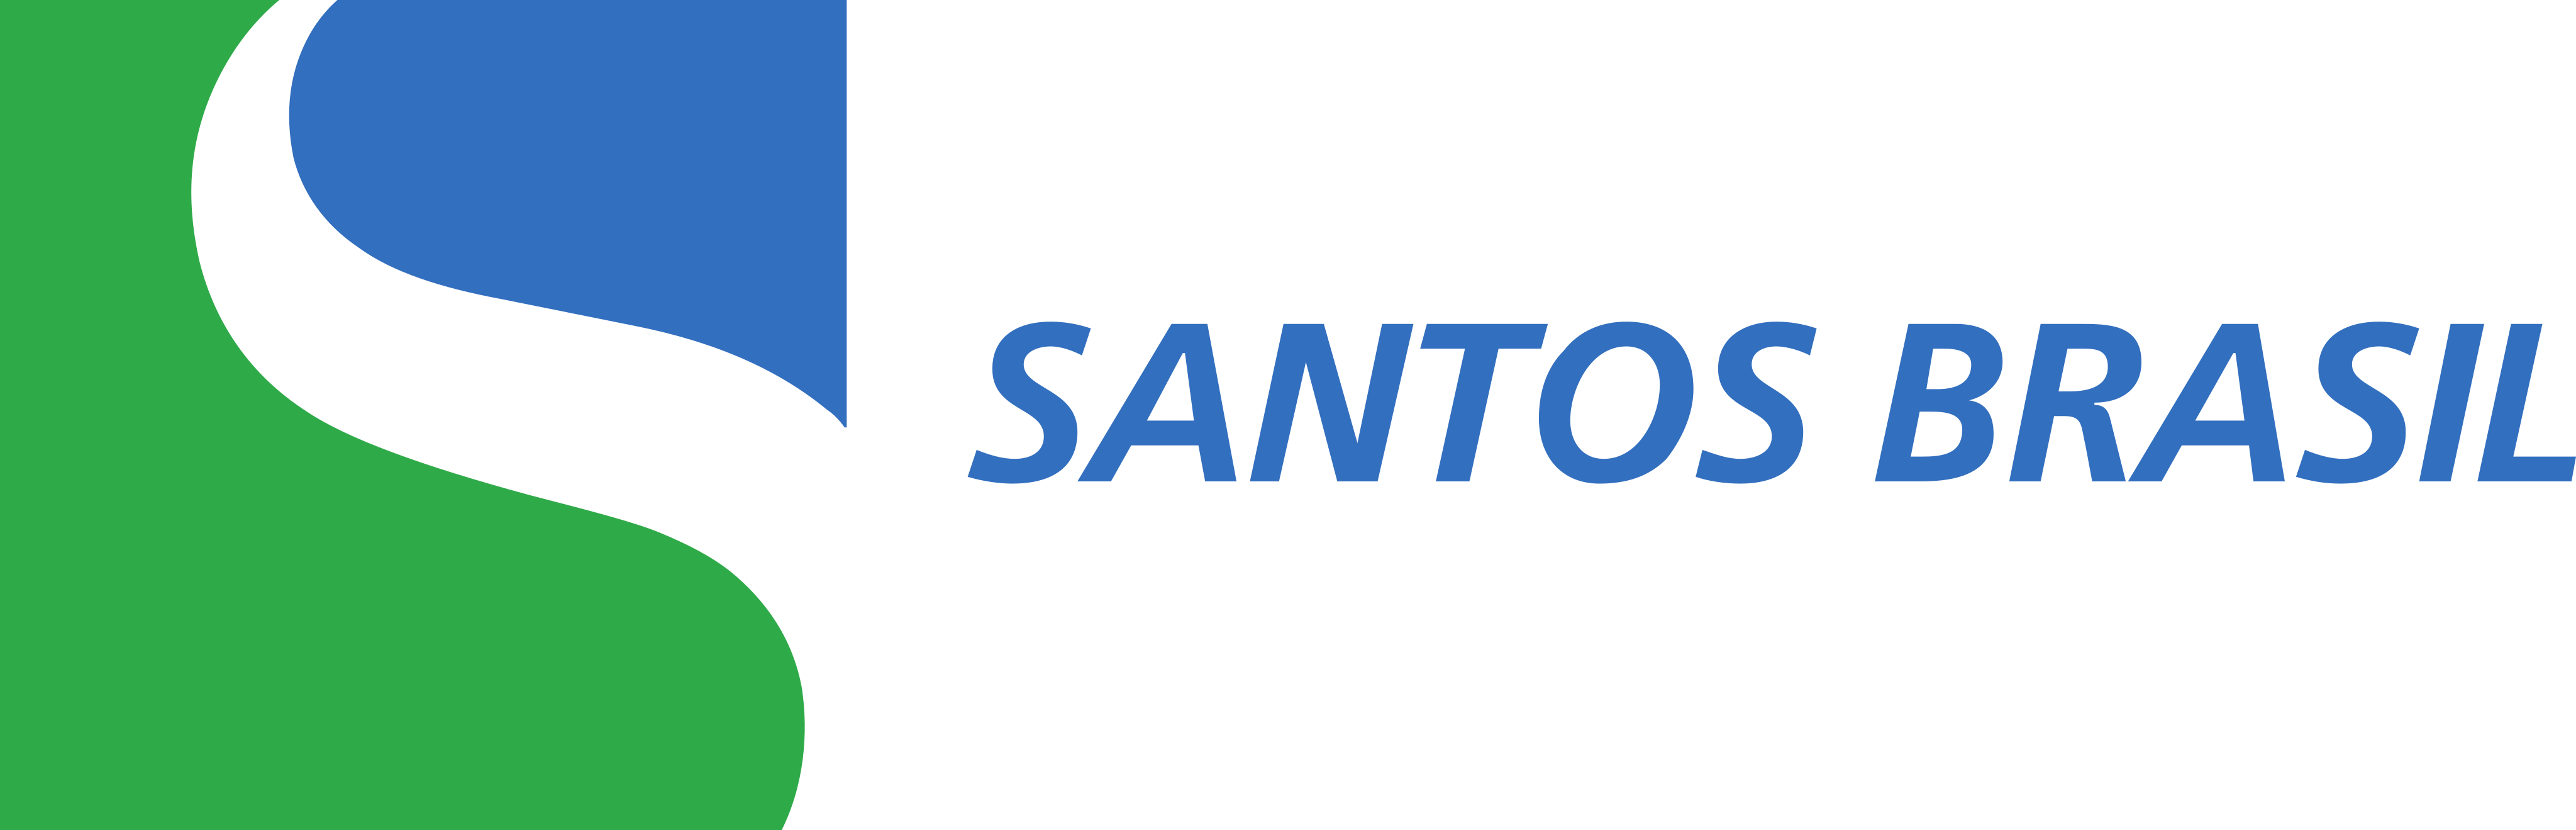 Santos Brasil Logo.